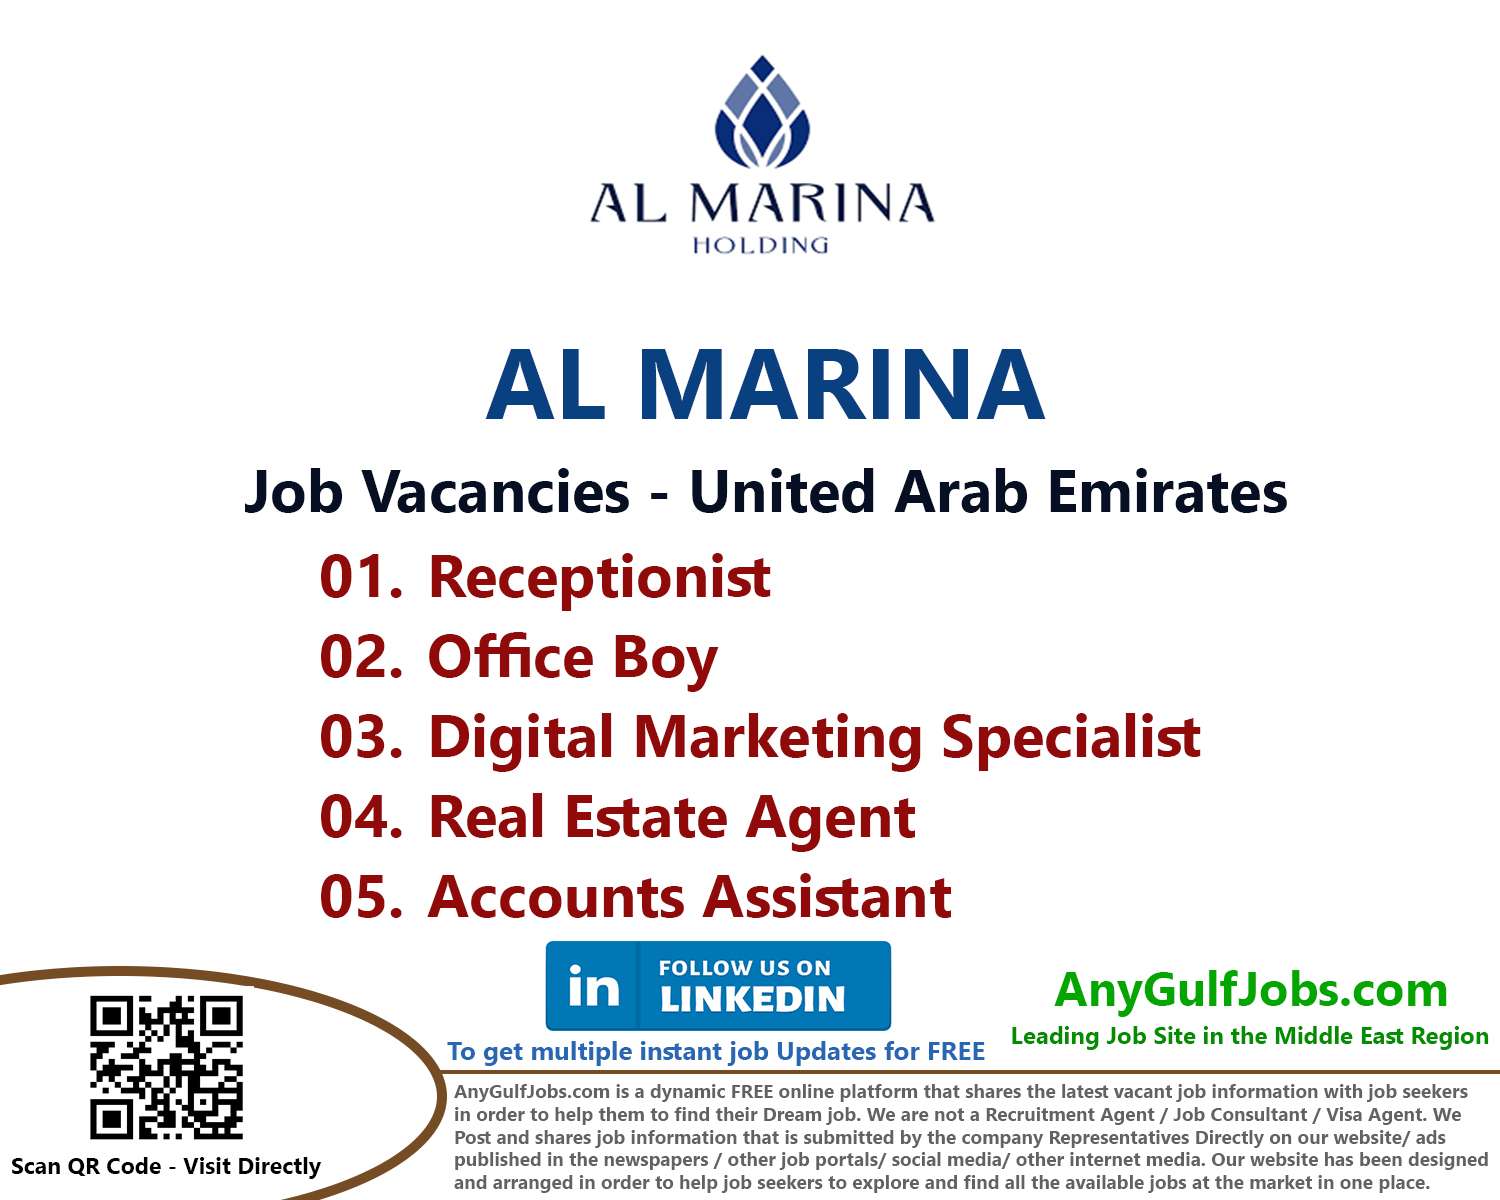 AL MARINA Job Vacancies - UAE